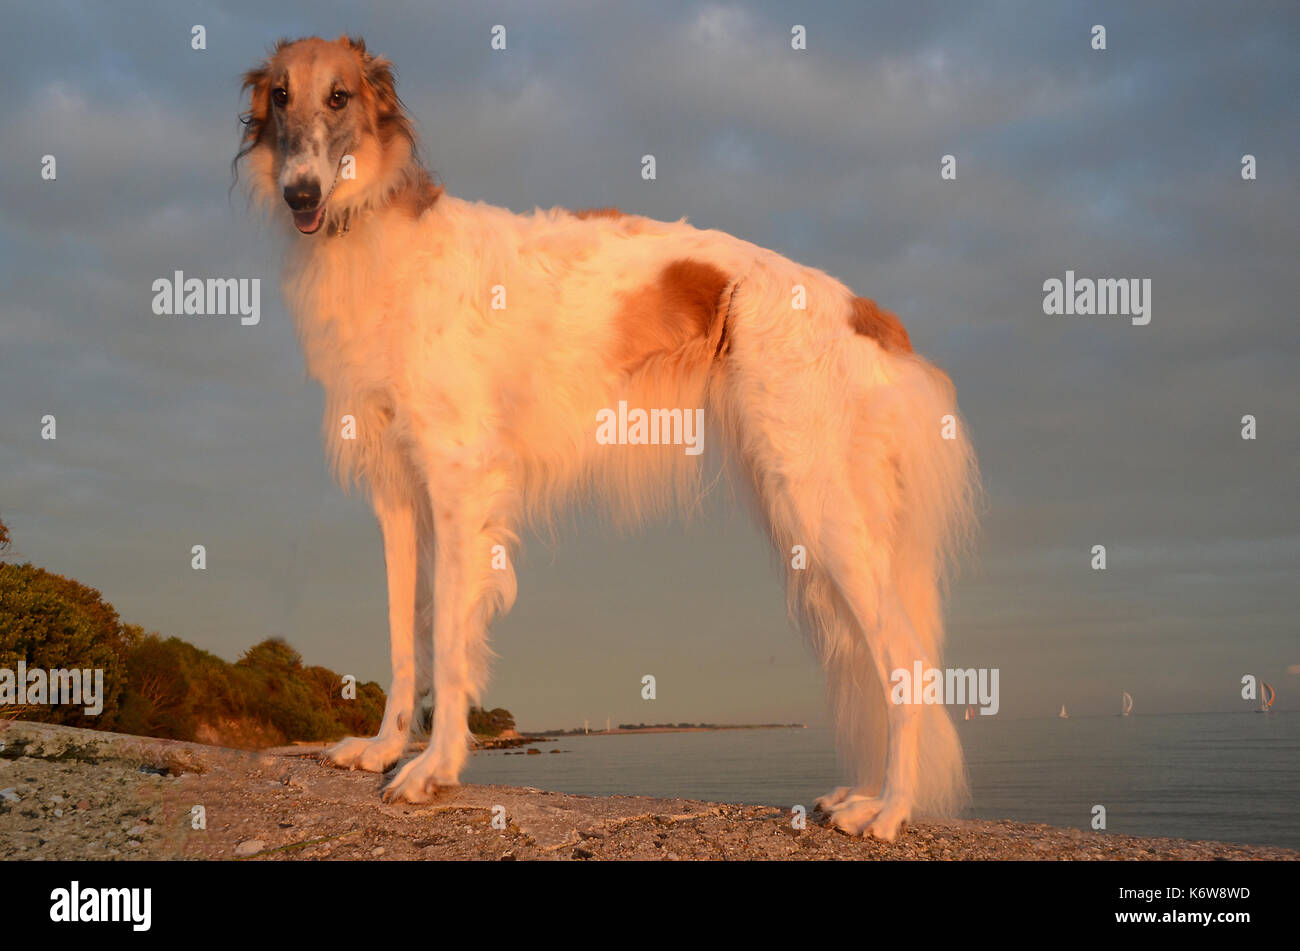 Borzoi dog standing at a beach. Stock Photo